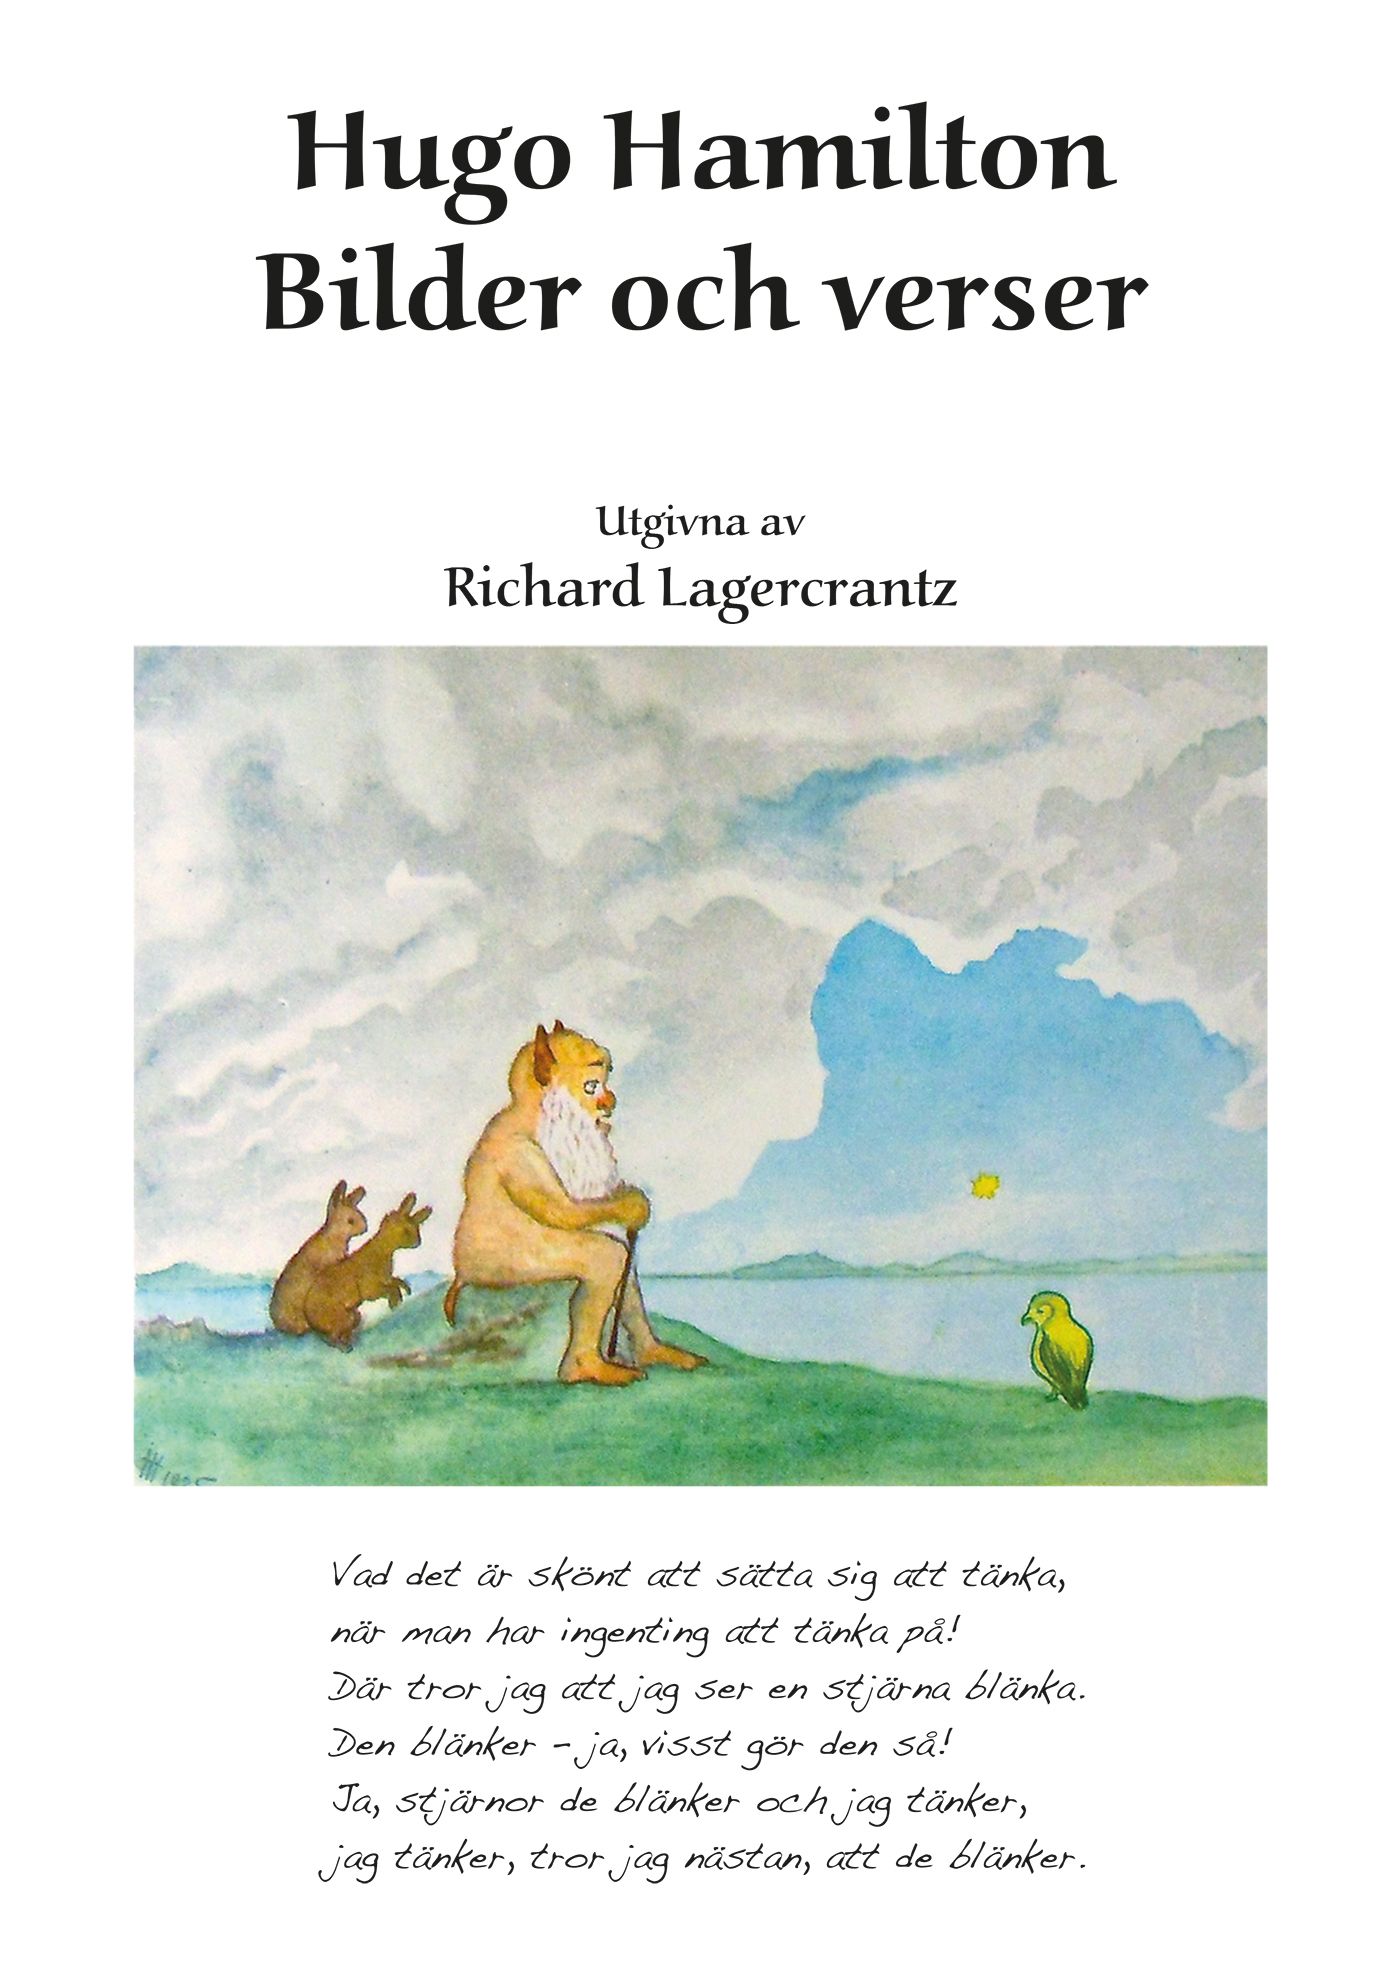 Hugo Hamilton: Bilder och verser, e-bog af Richard Lagercrantz